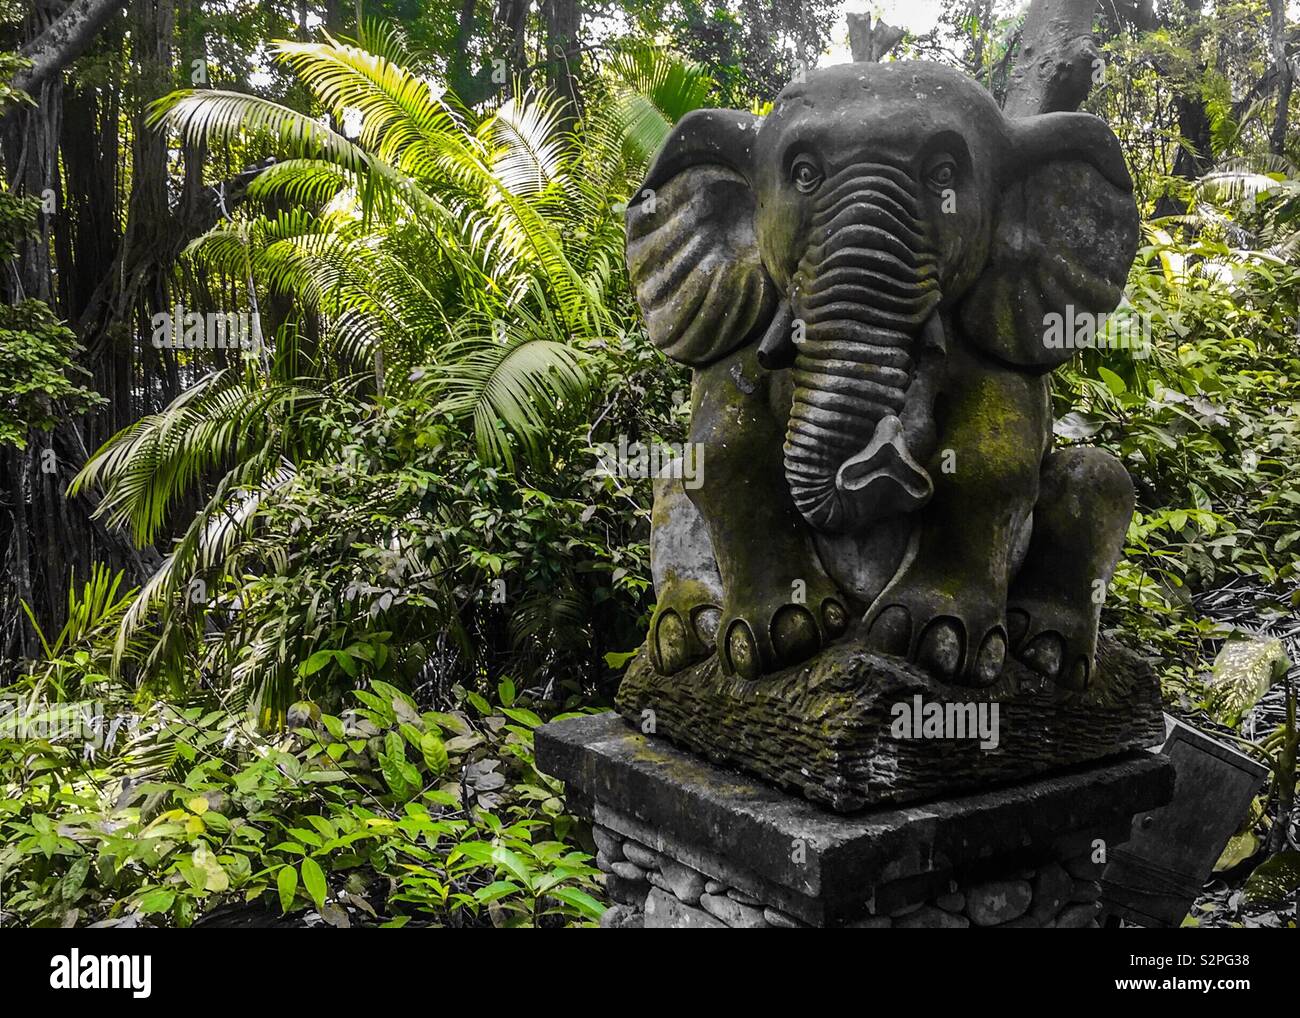 Elephant jungle statue Stock Photo - Alamy